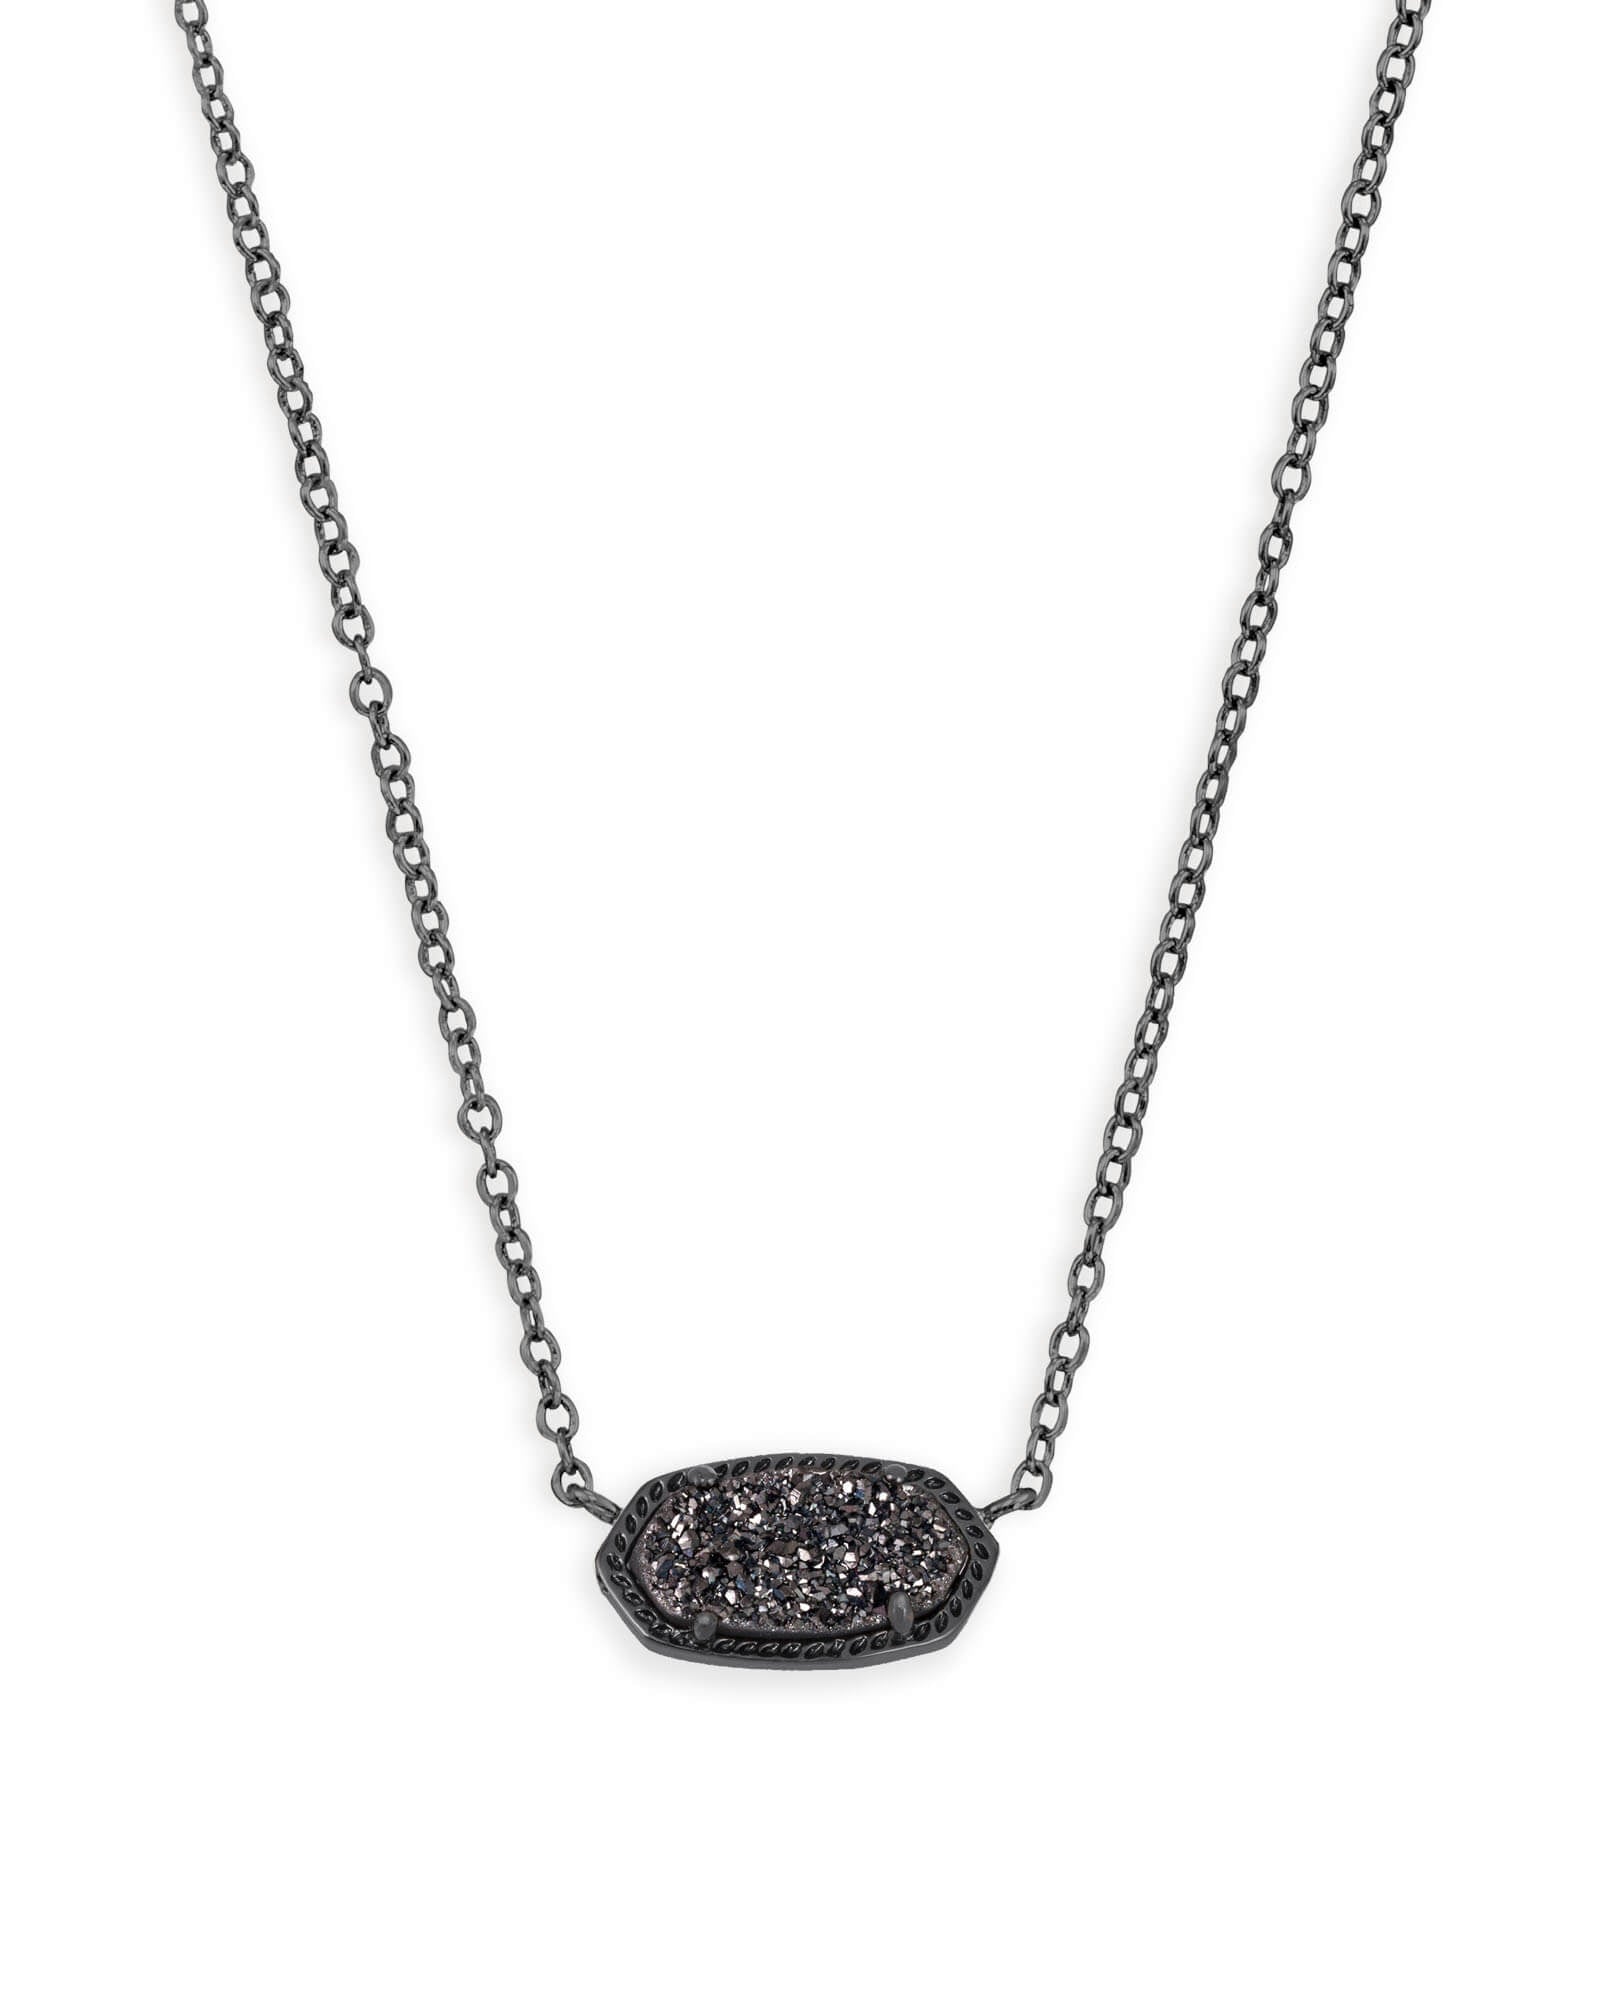 Kendra Scott Elisa Gold Pendant Necklace in Azalea Illusion | eBay